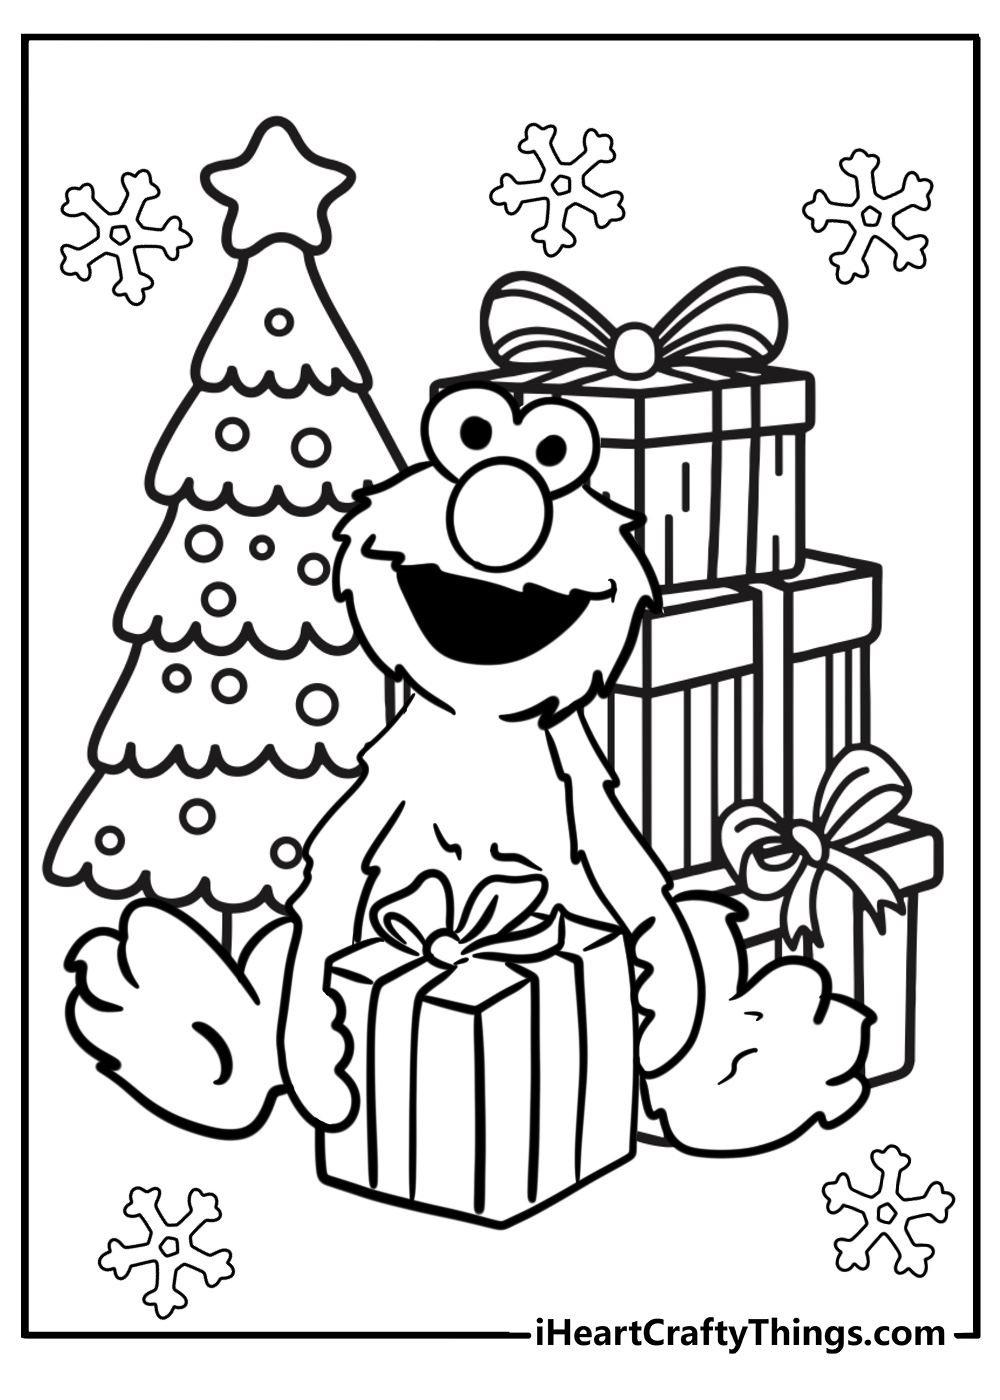 Christmas themed elmo coloring sheet